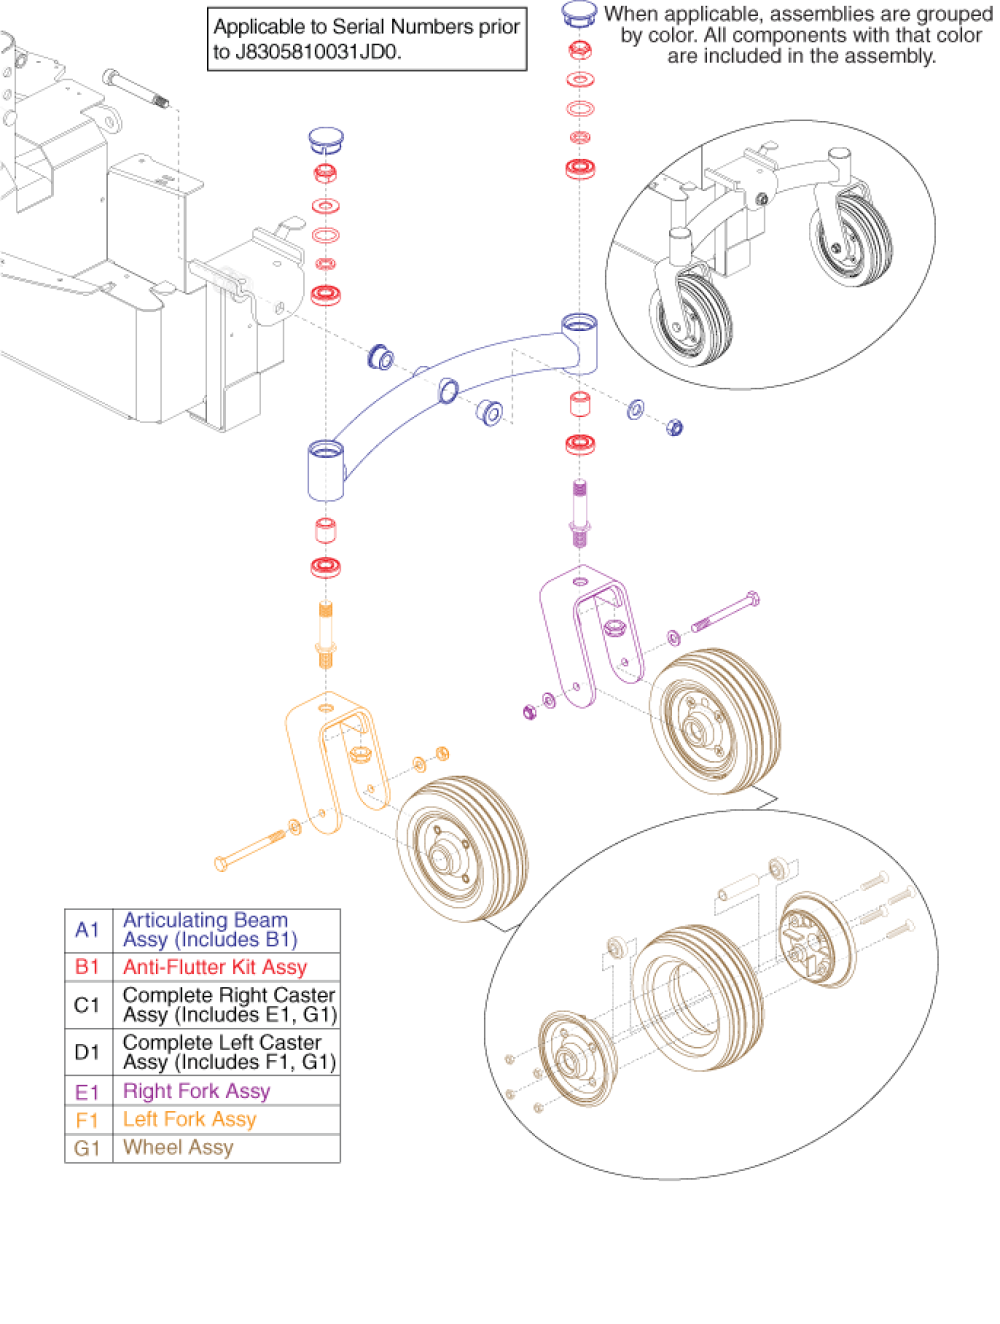 Articulating Beam Assembly - Gen 1, Gray Wheels parts diagram